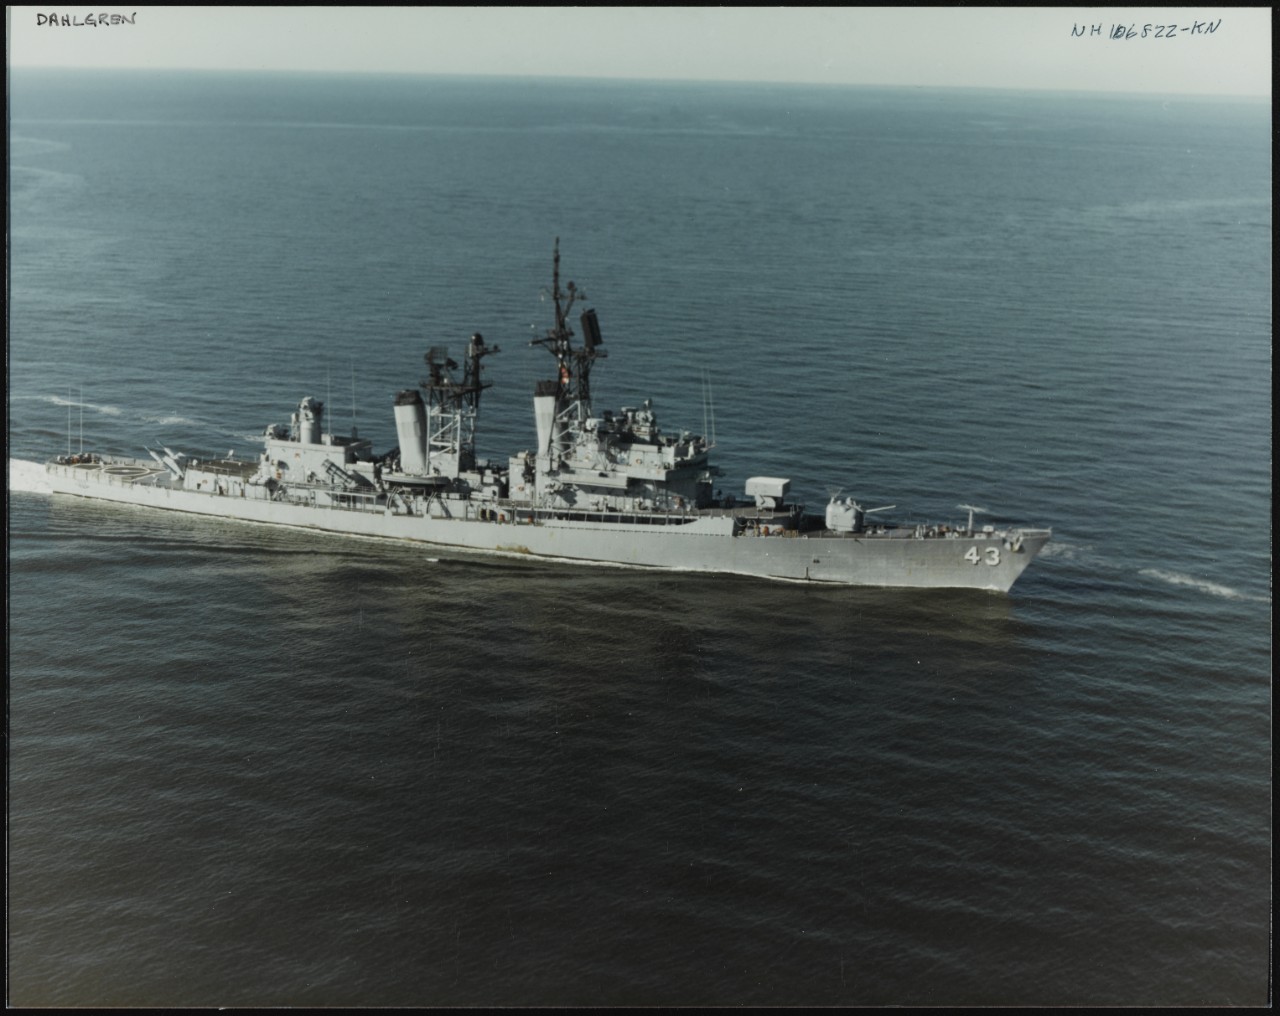 Photo # NH 106822-KN USS Dalhgren